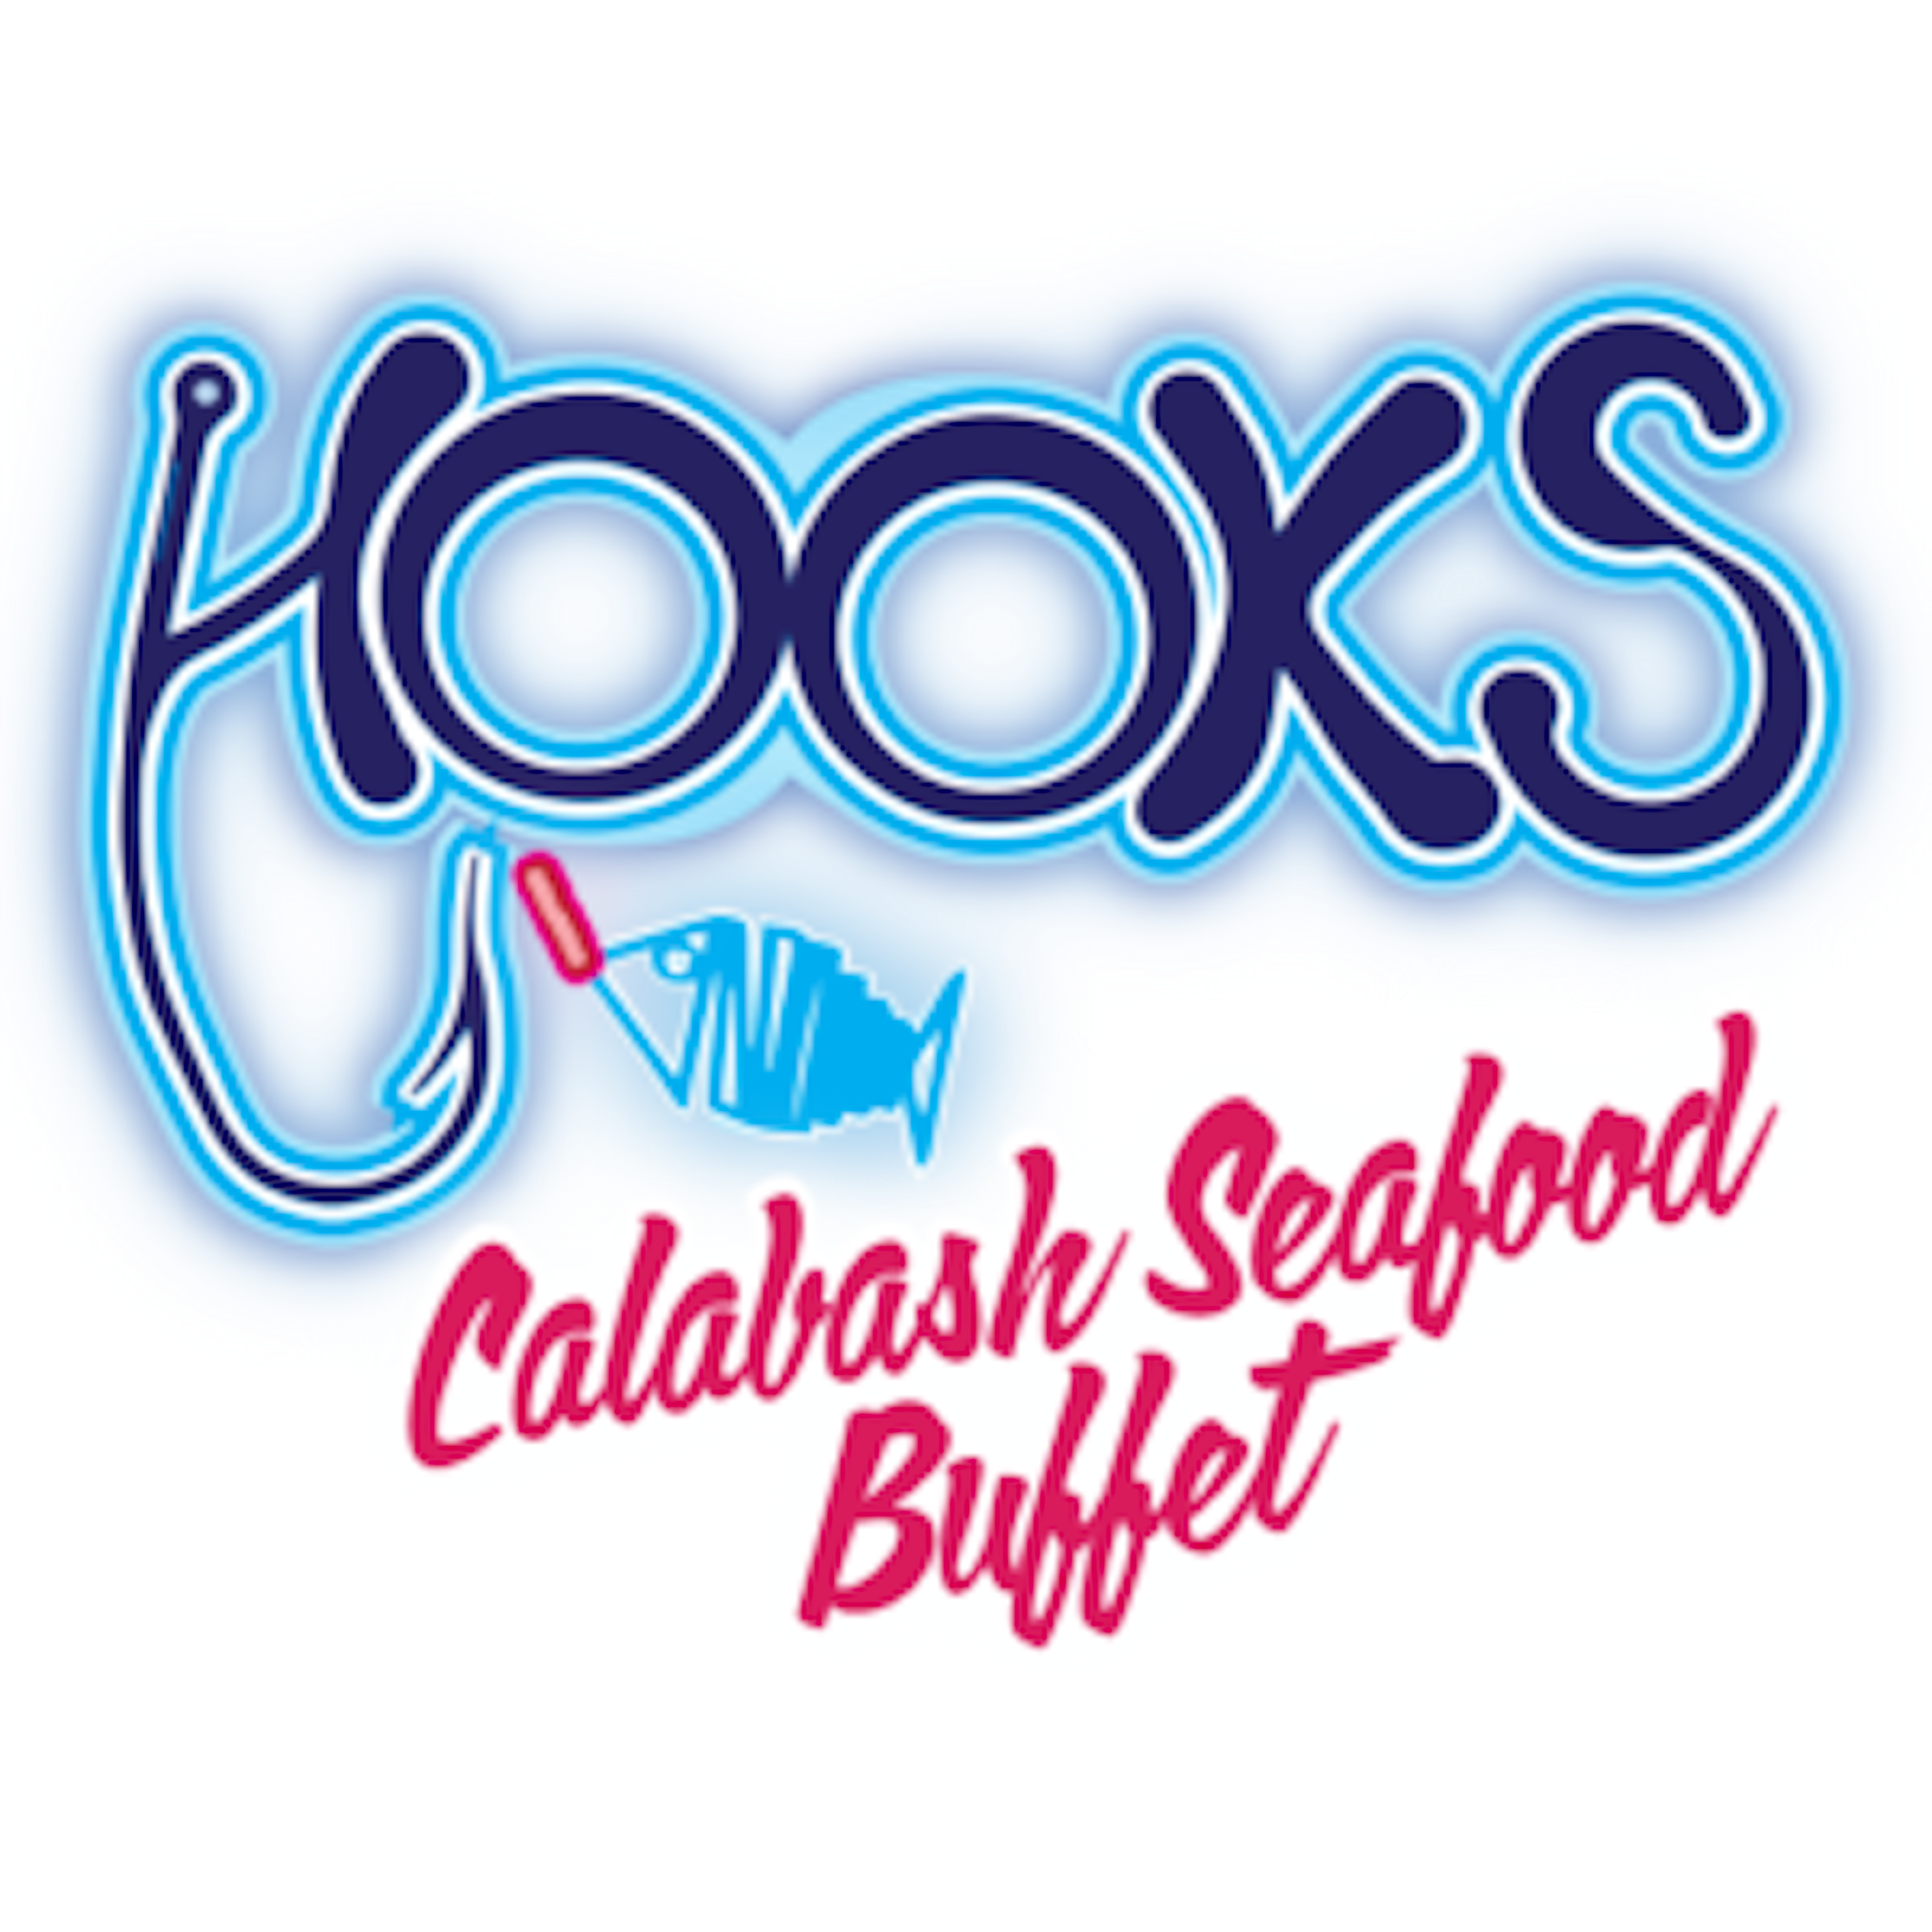 Hooks Calabash Seafood Buffet